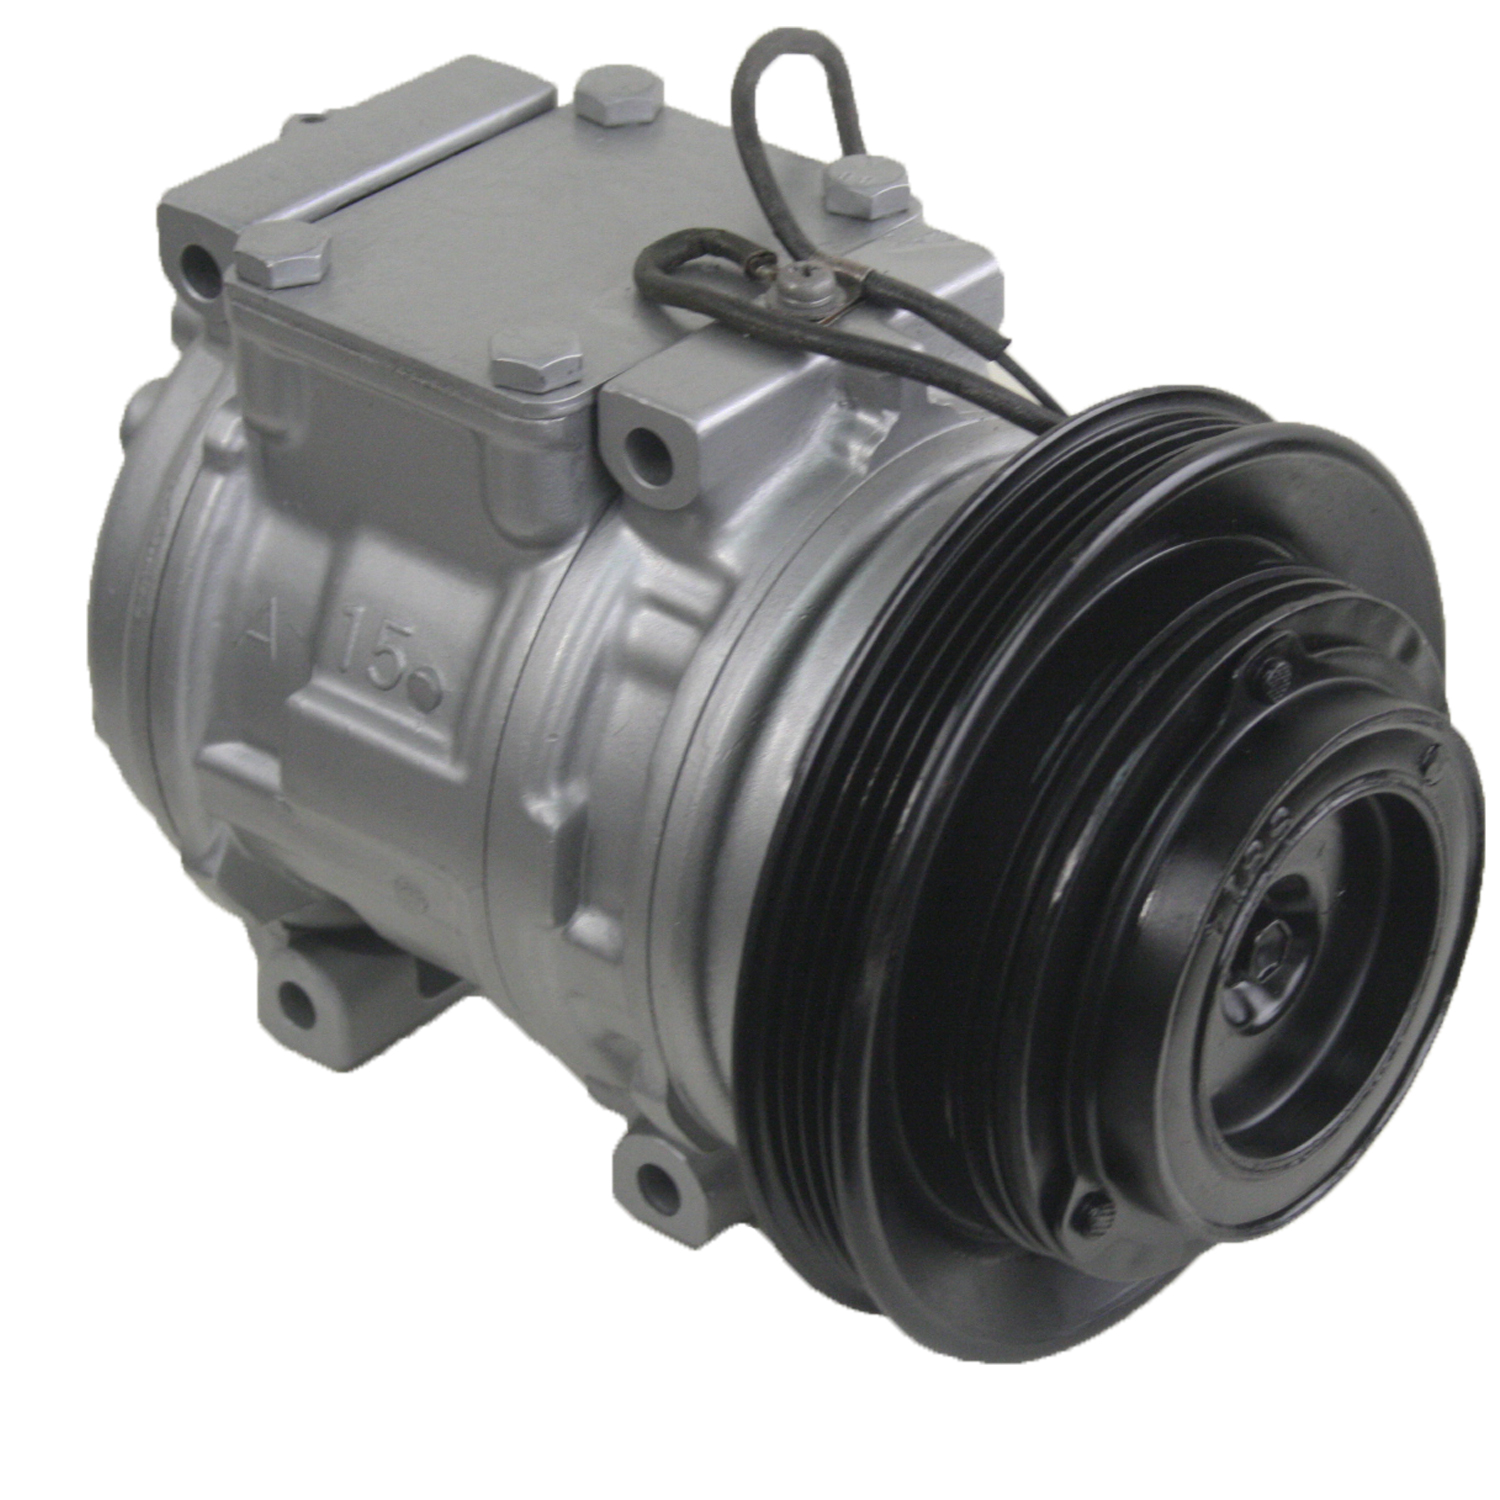 TCW Compressor 31216.405 Remanufactured Product Image field_60b6a13a6e67c